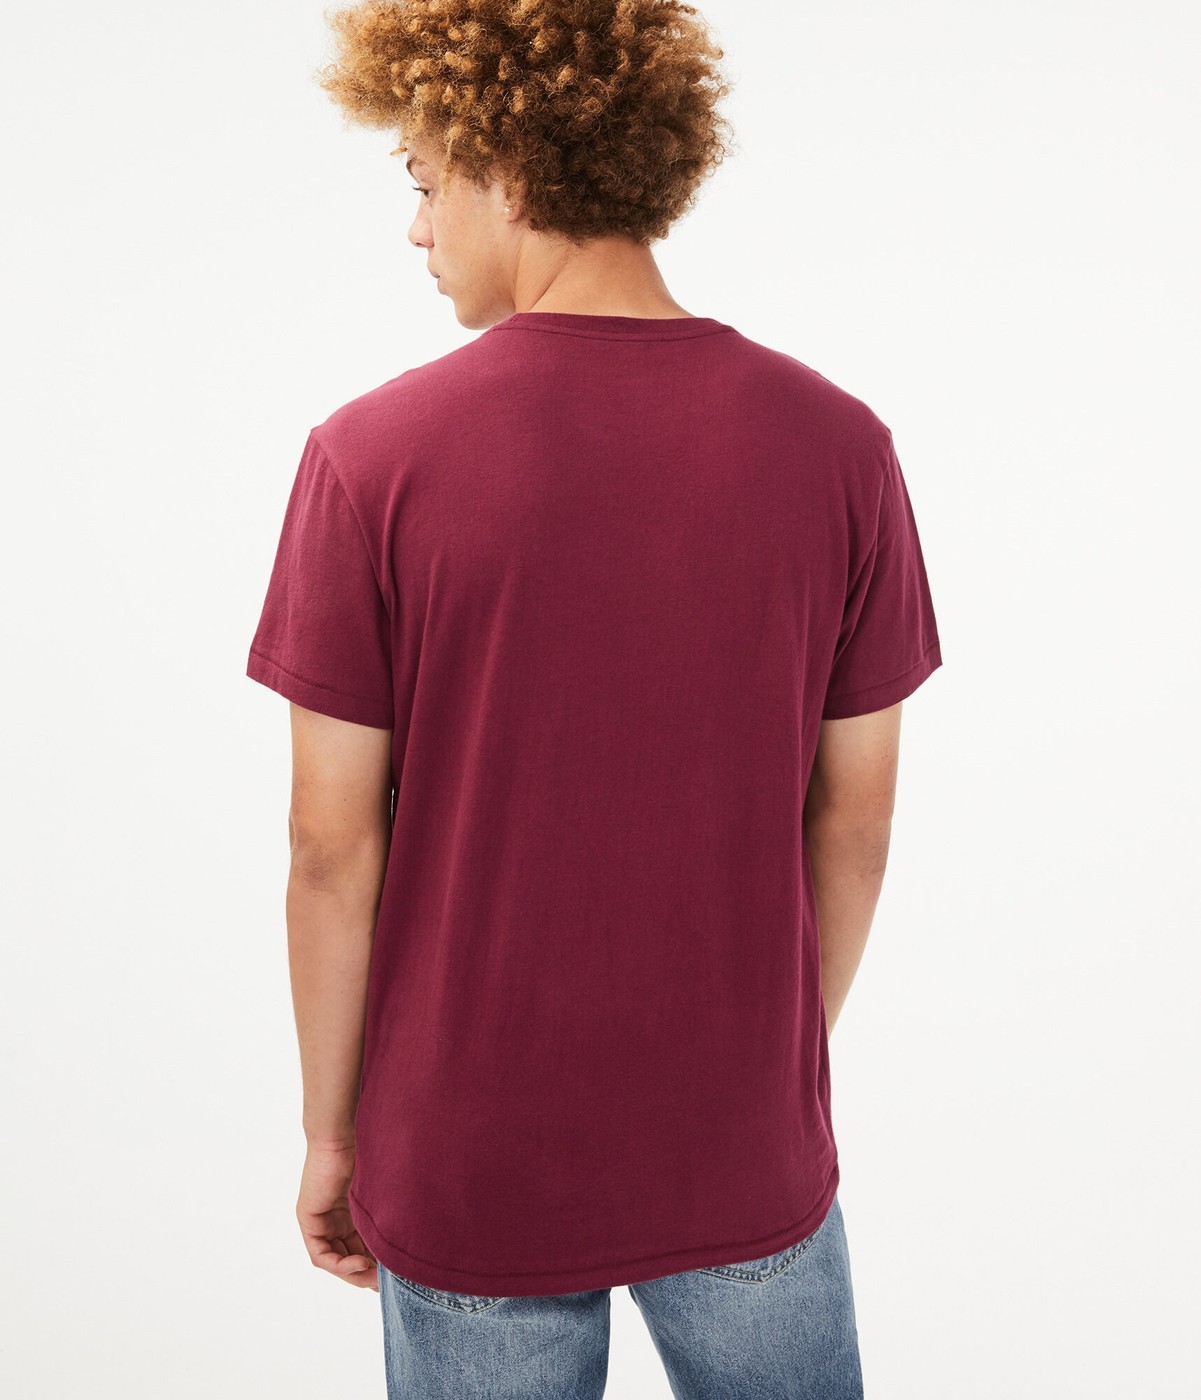 Бордовая футболка - мужская футболка Aeropostale